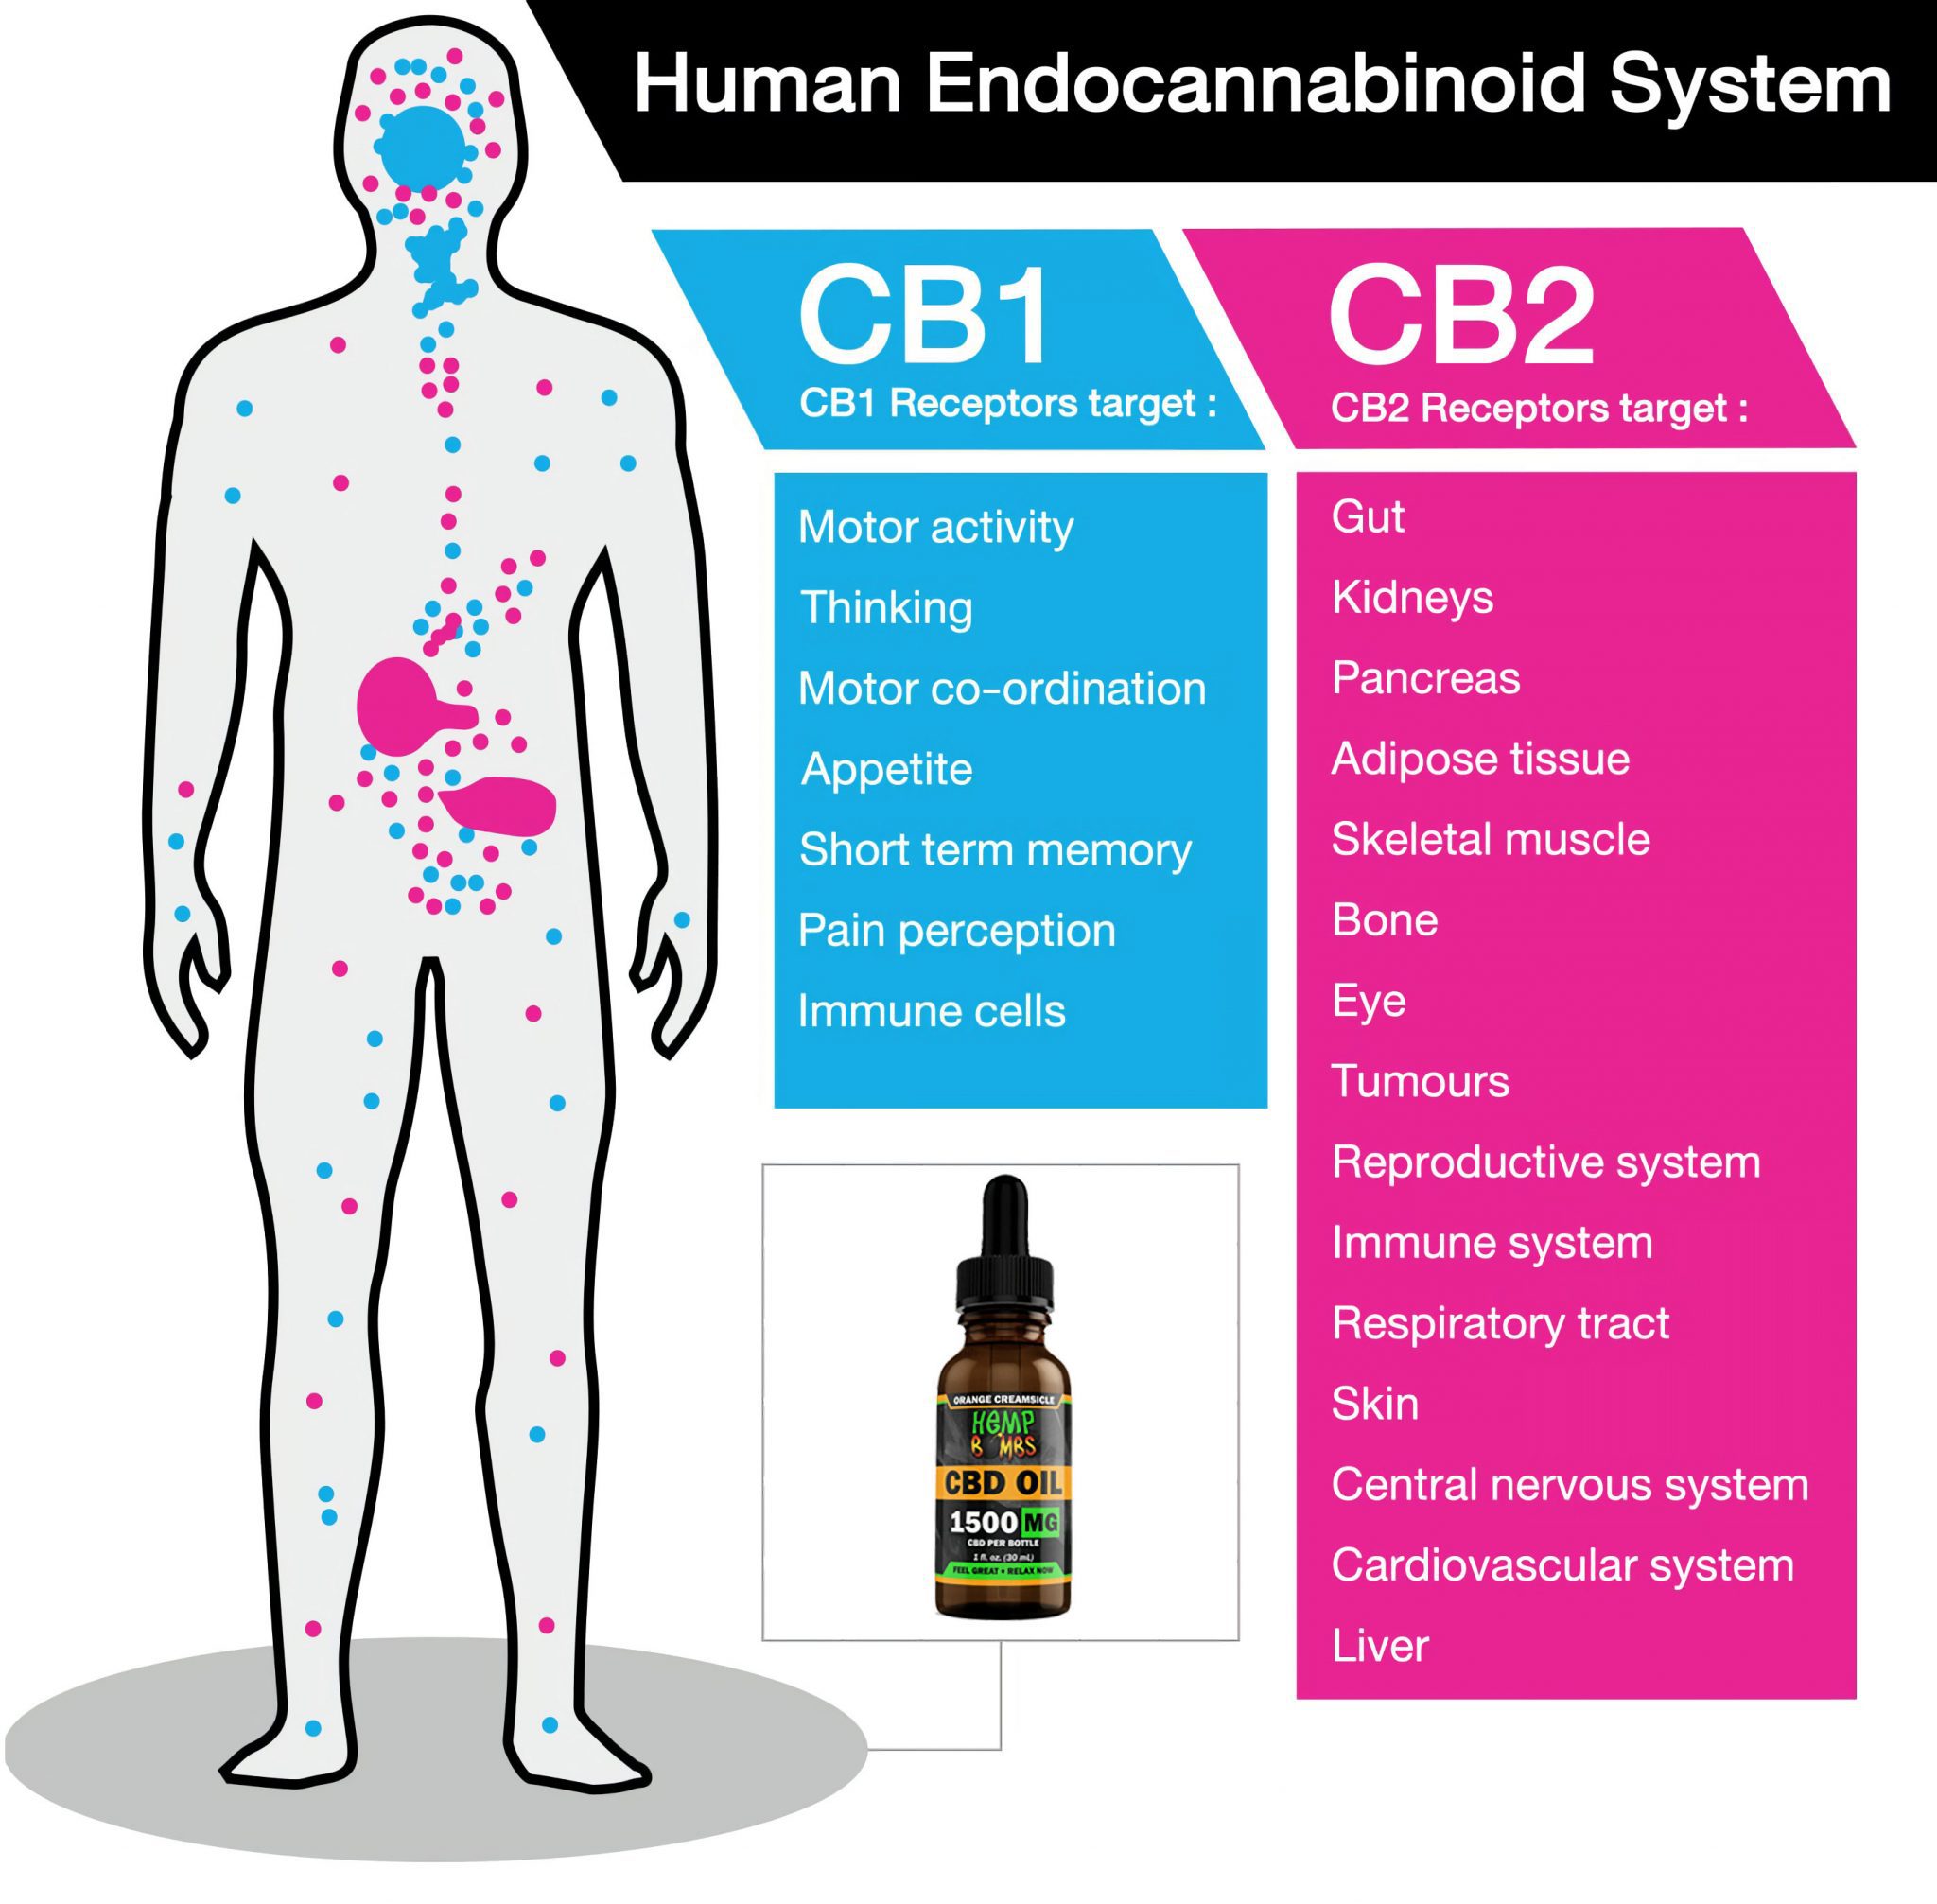 Human endocannabinoid system